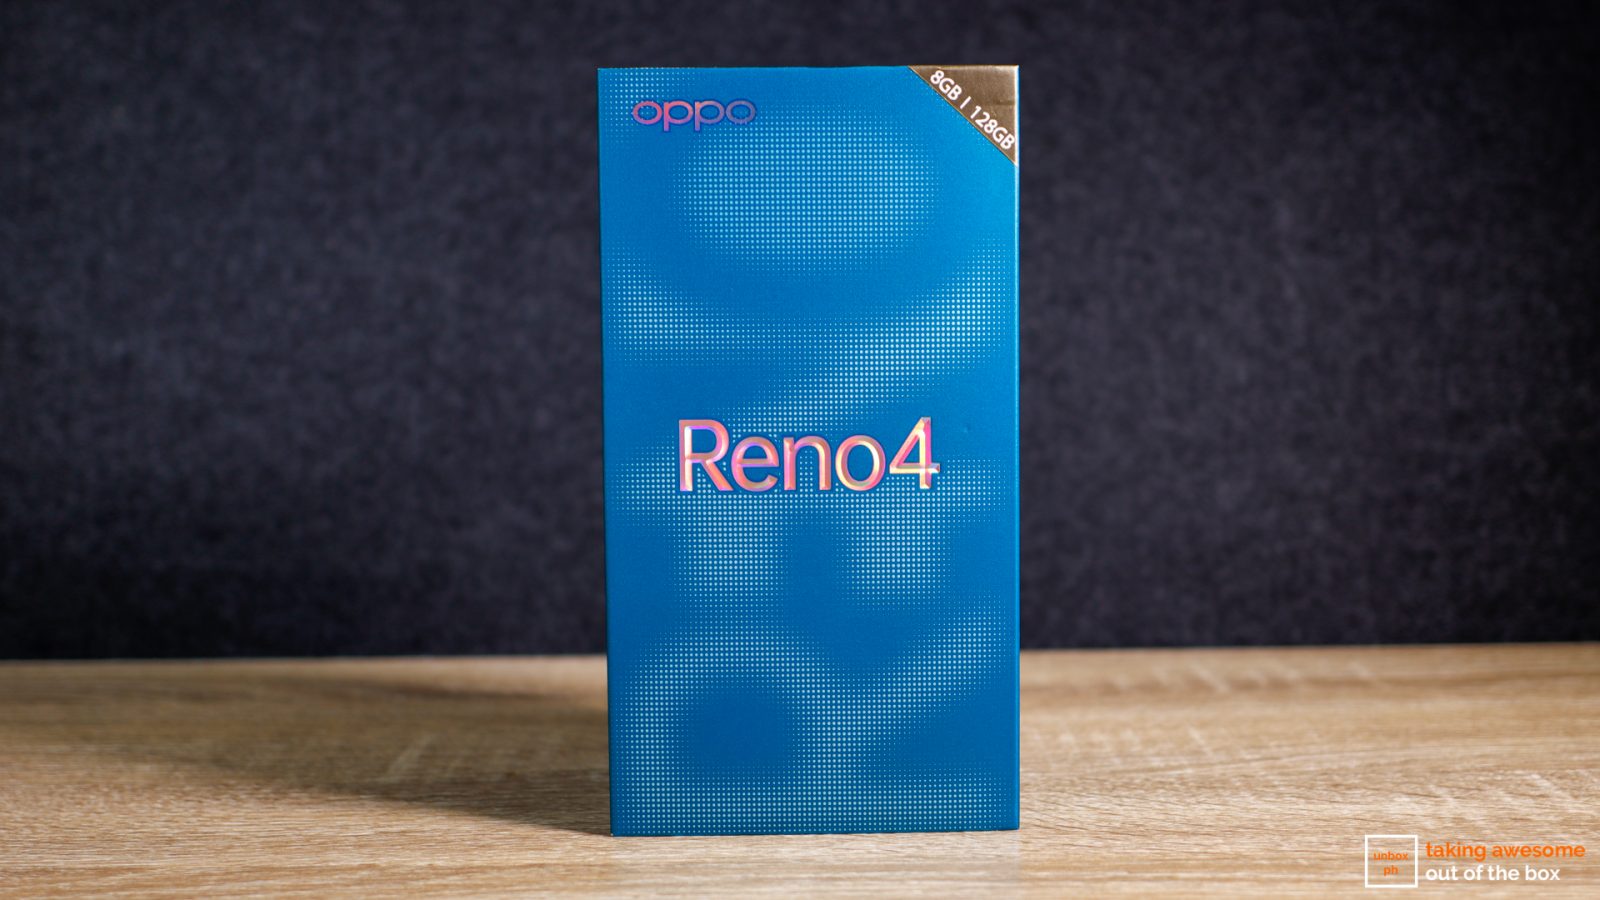 OPPO Reno4 Box